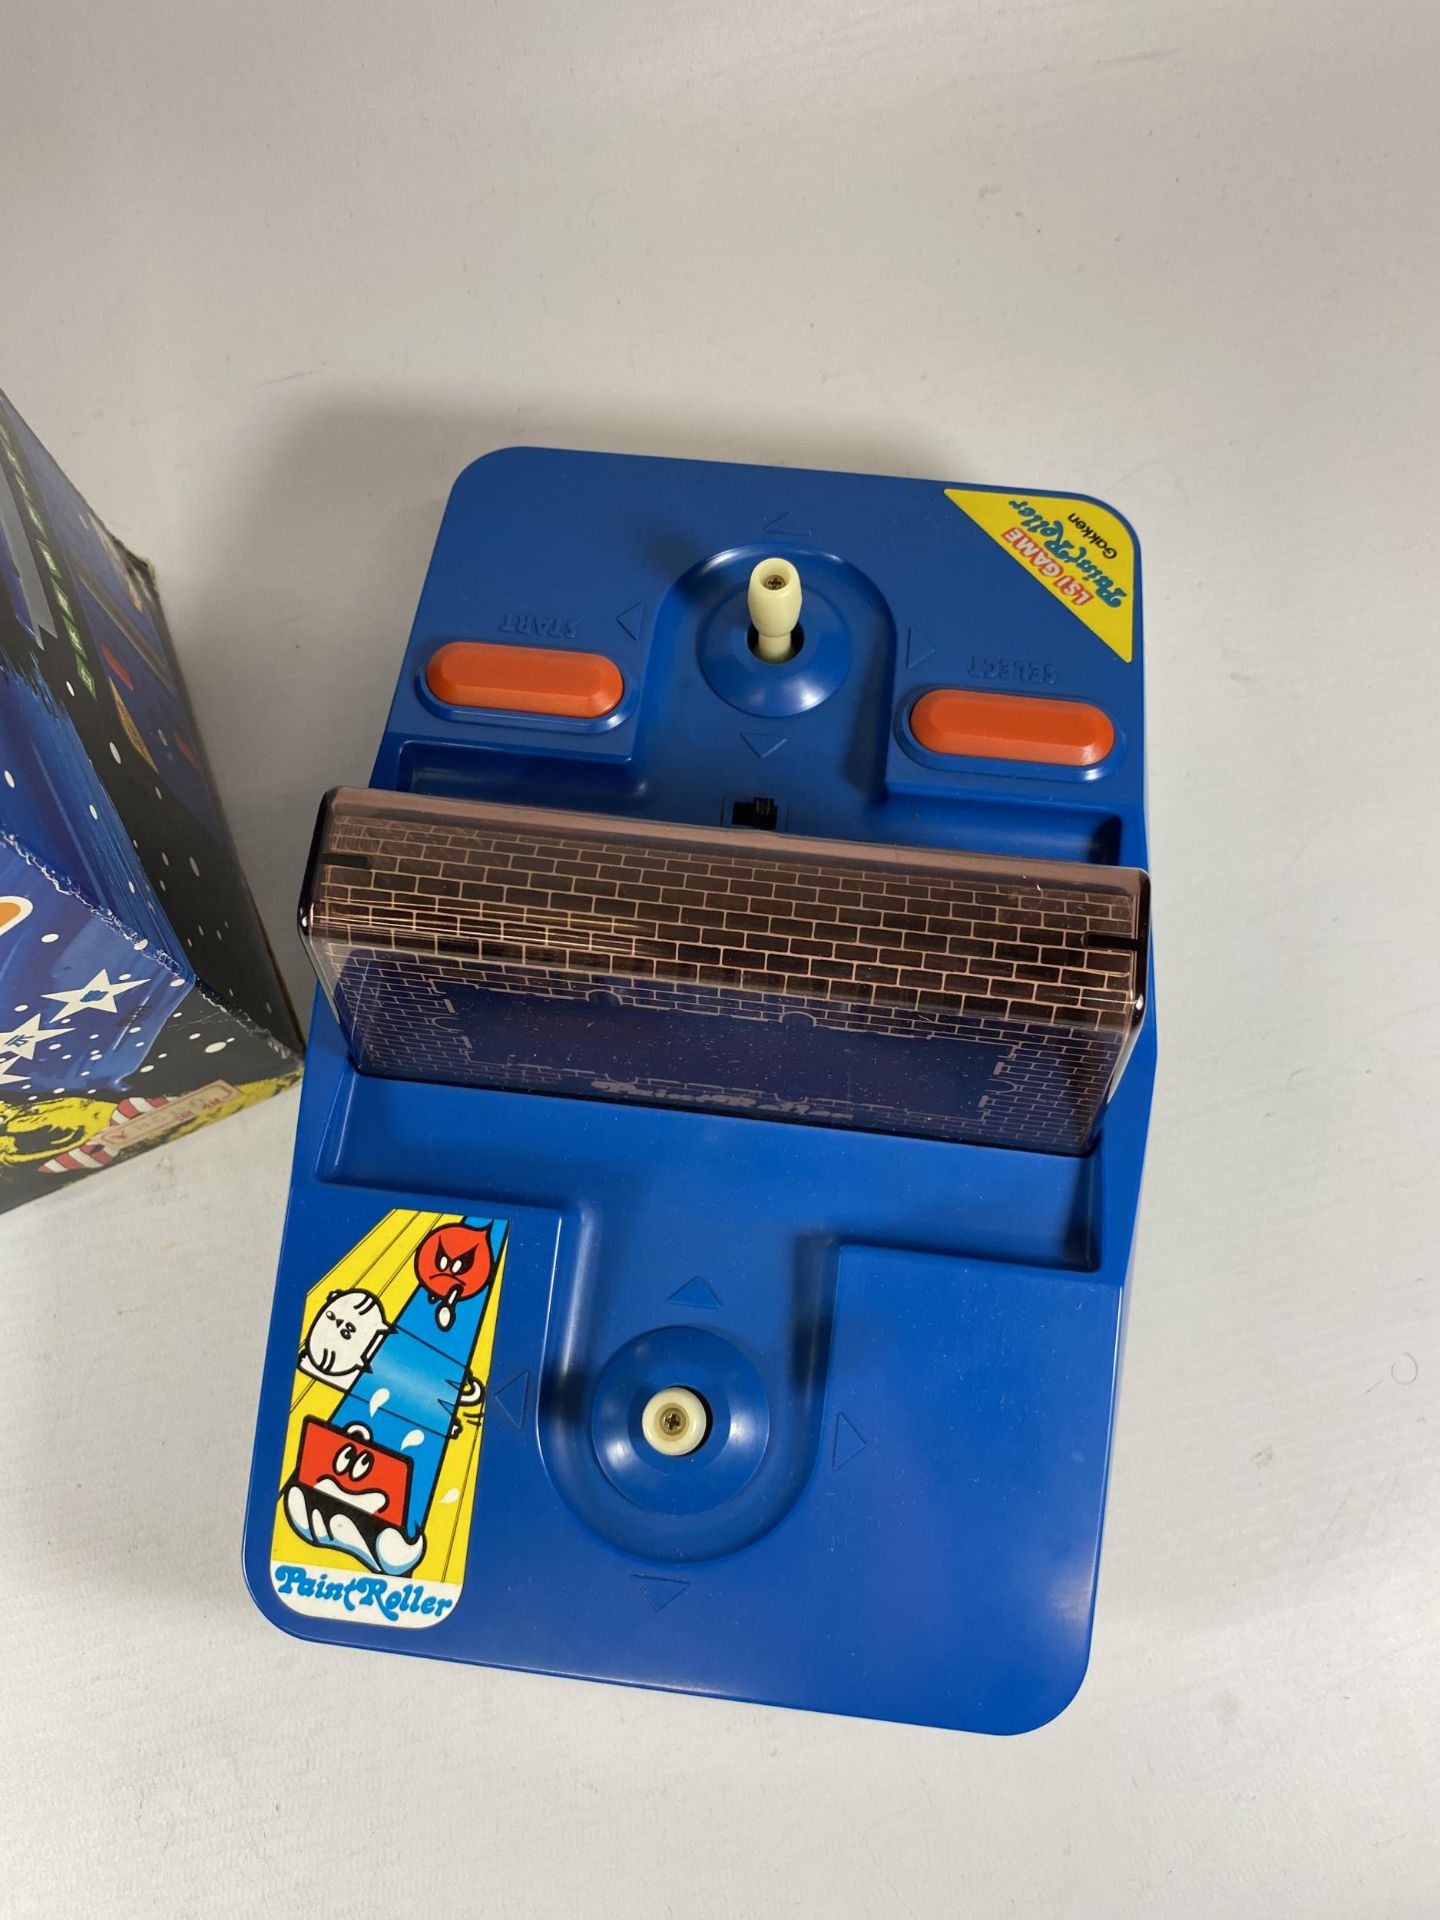 A RARE BOXED RETRO GAKKEN LSI ARCADE GAME - Image 2 of 3